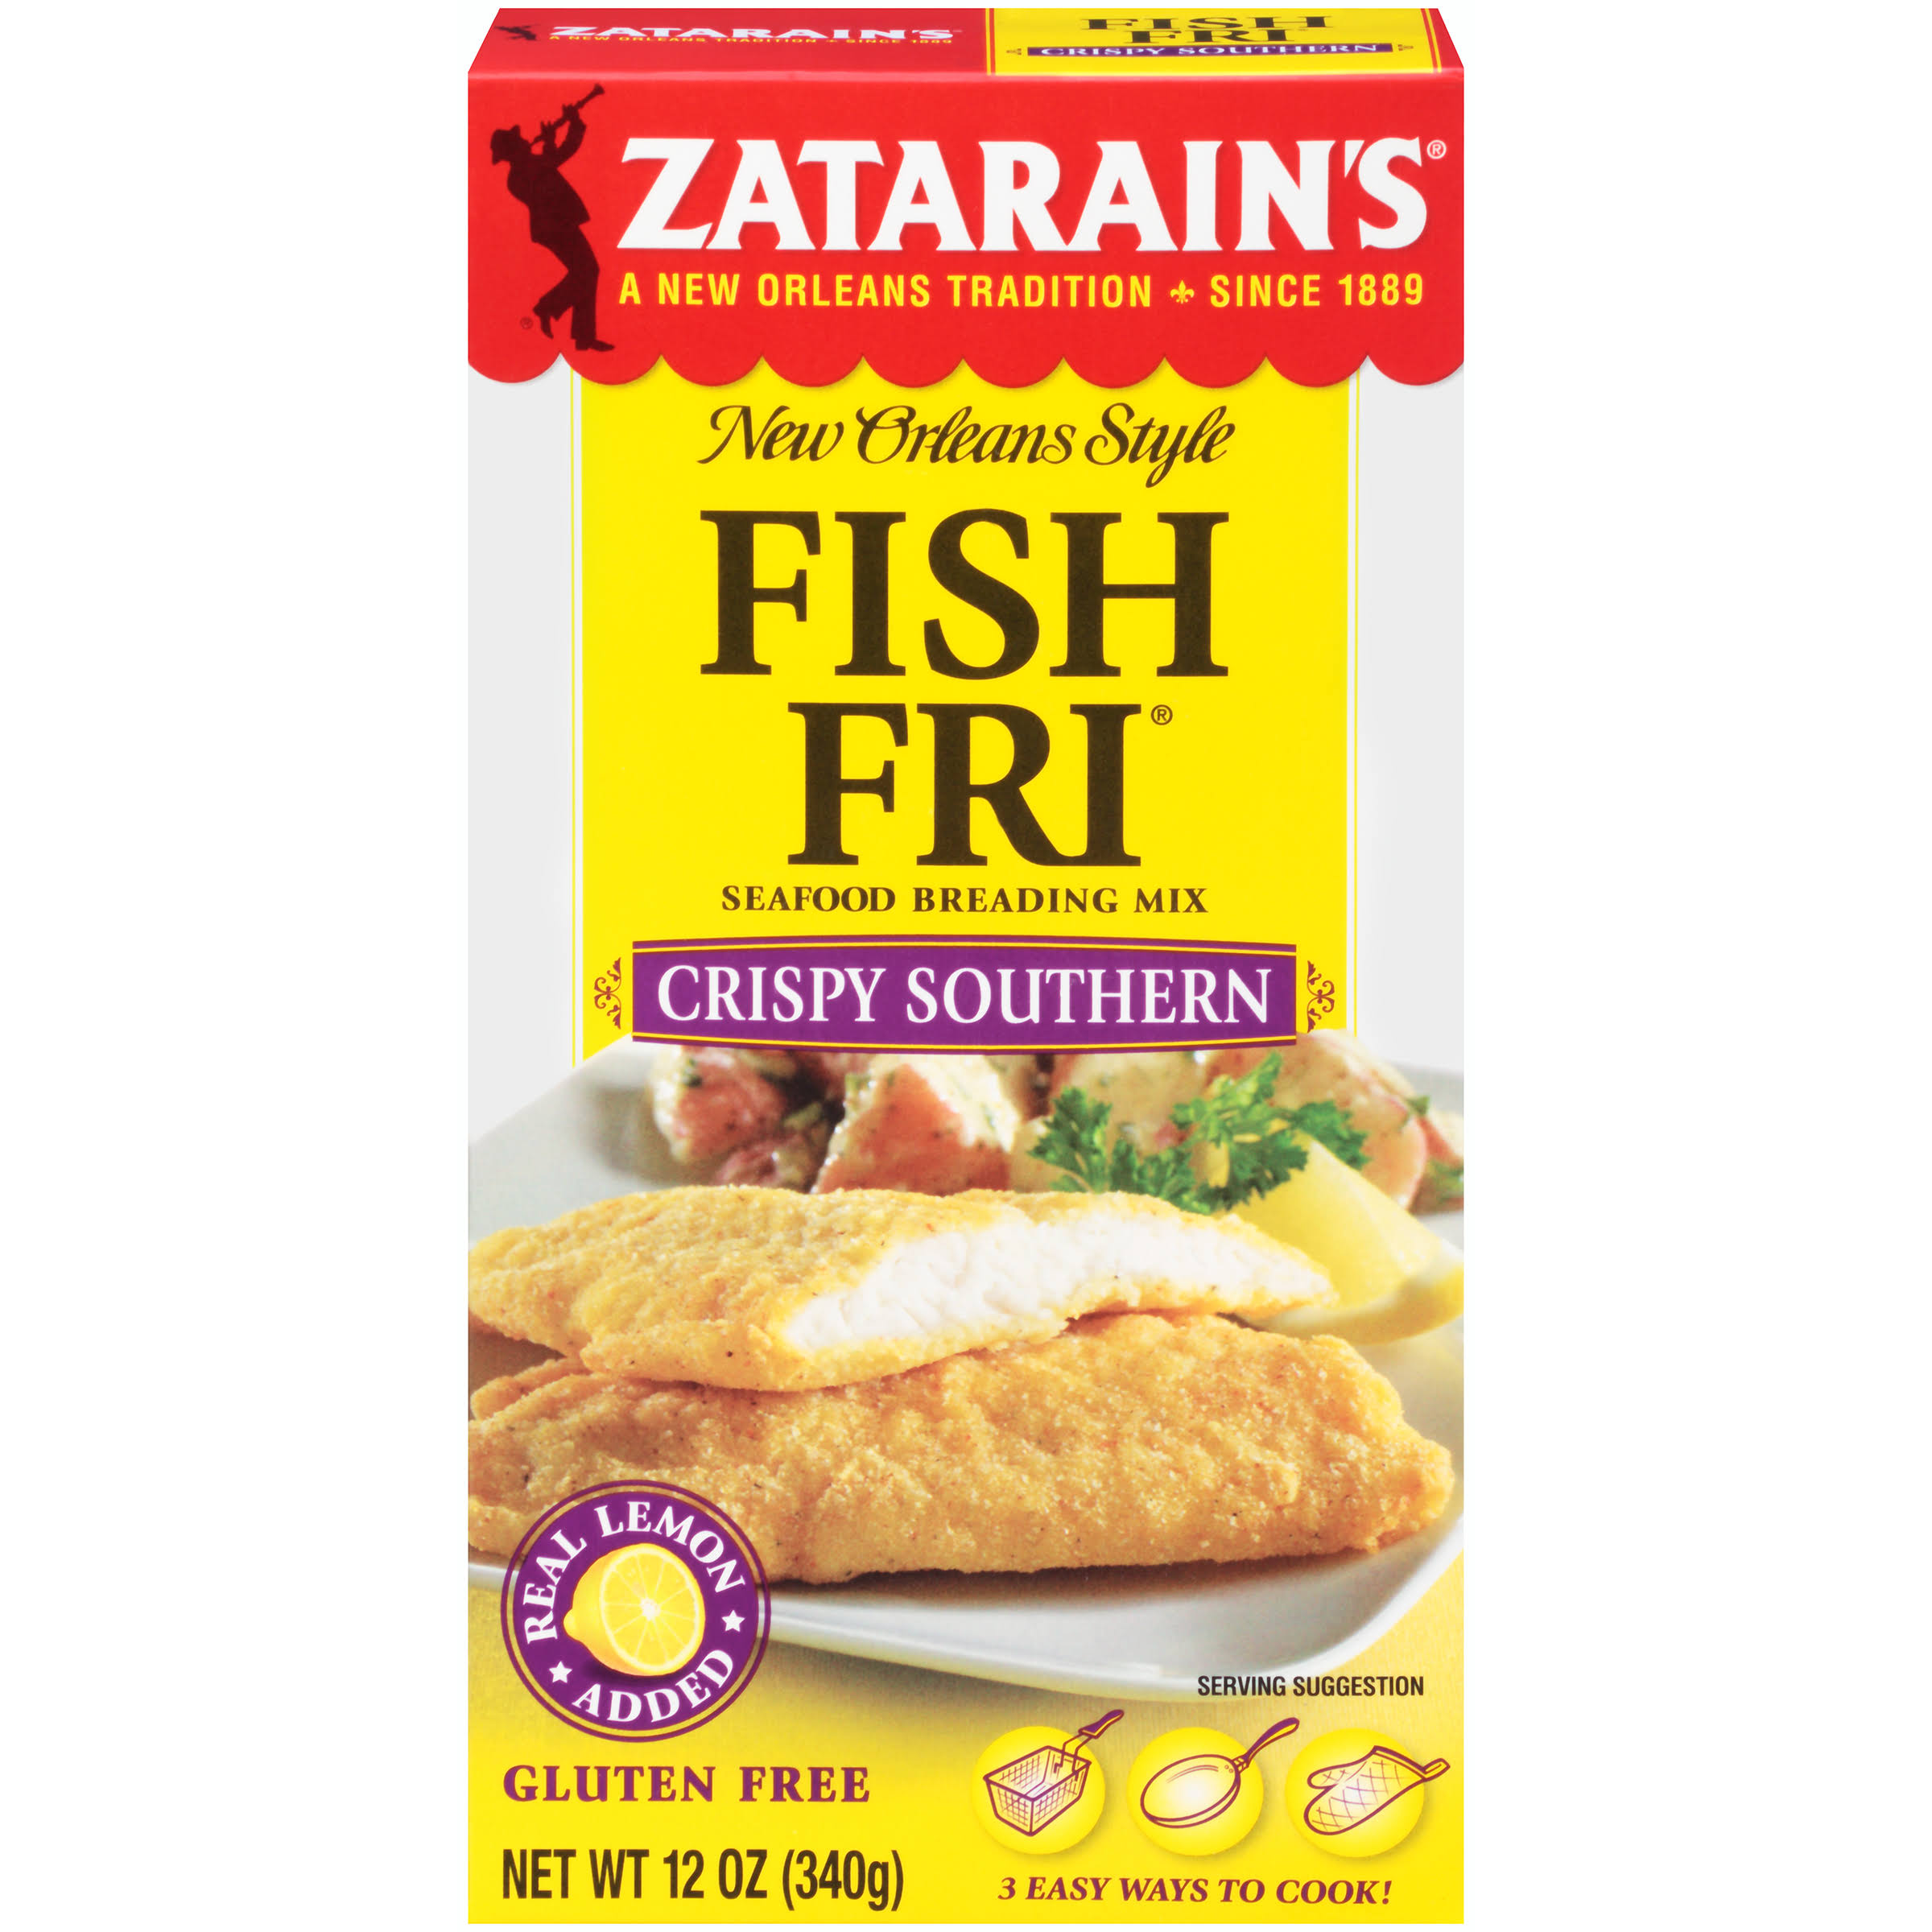 Zatarain's New Orleans Style Fish Fri Seafood Breading Mix - Crispy Southern, 12oz